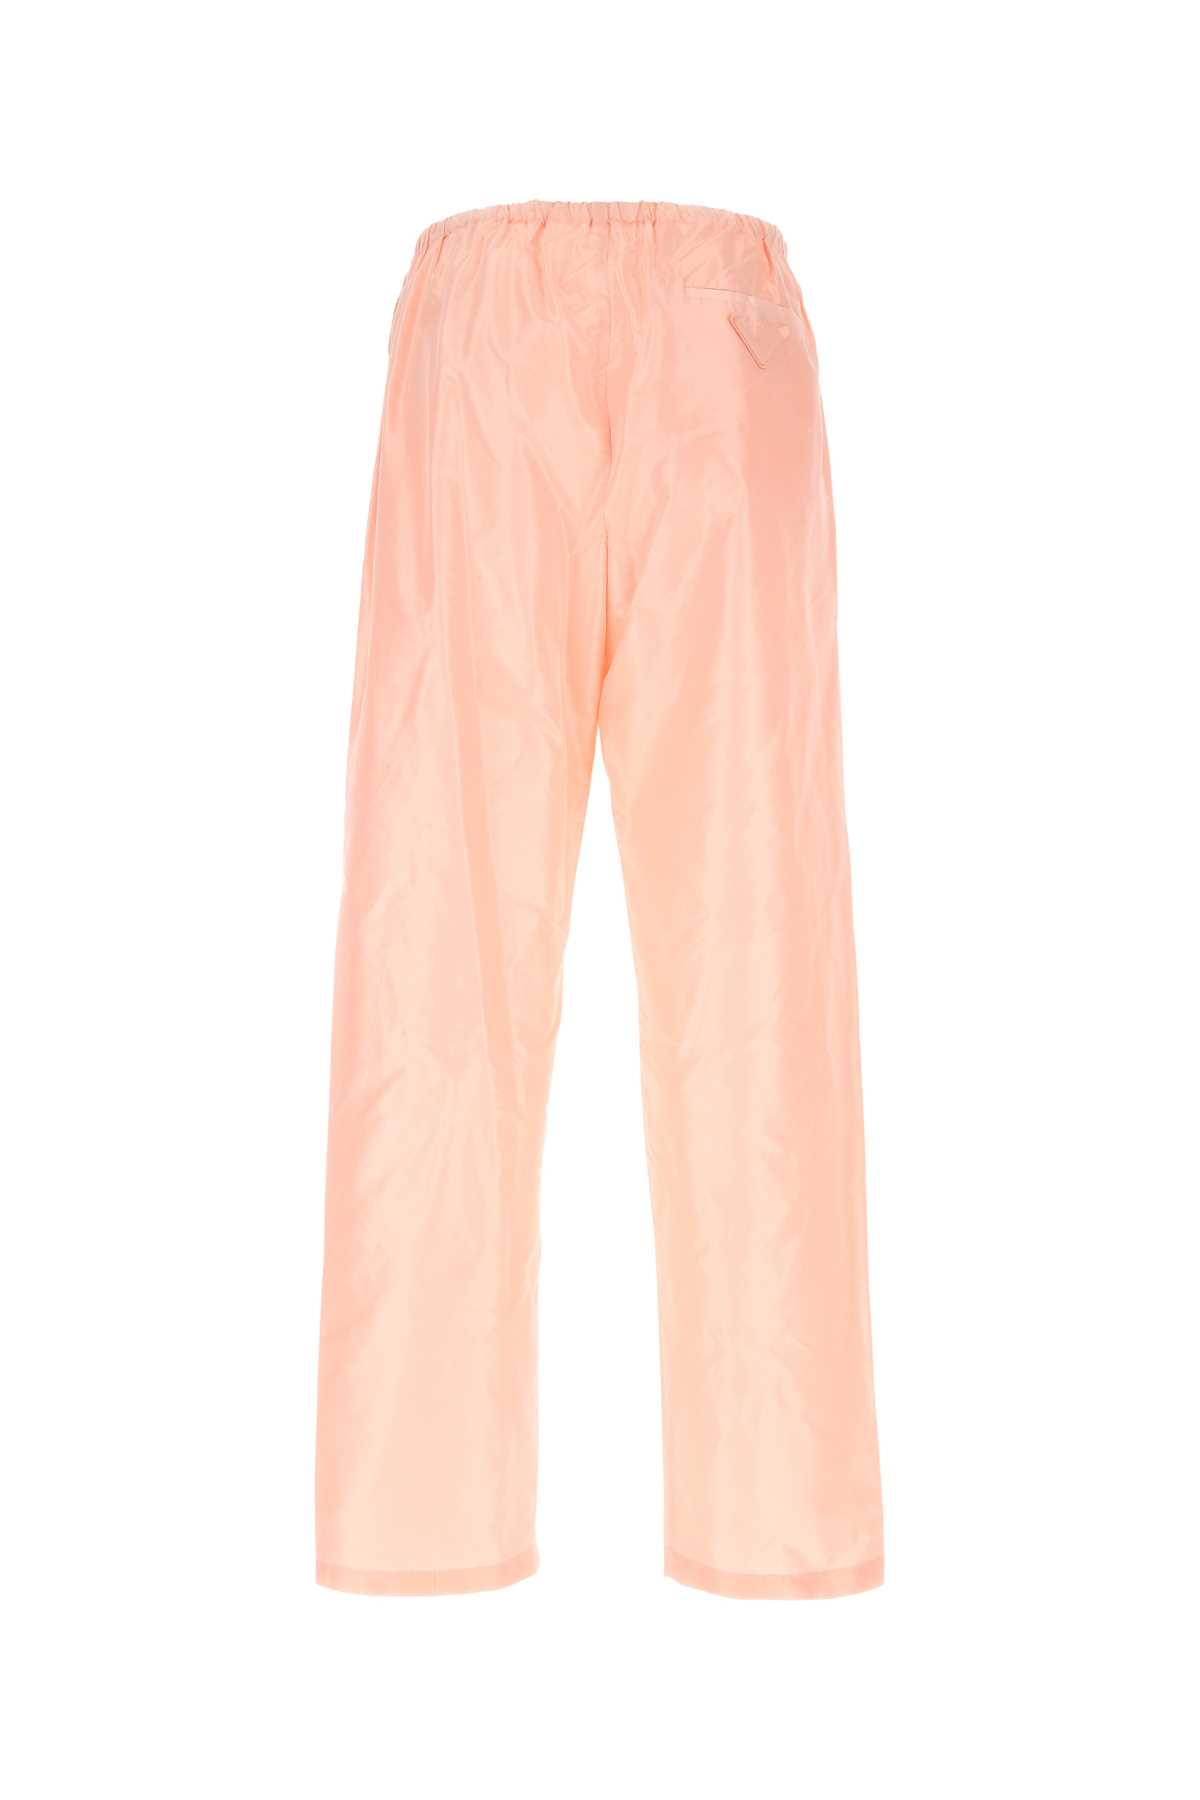 Prada Pink Silk Pant In F0v94